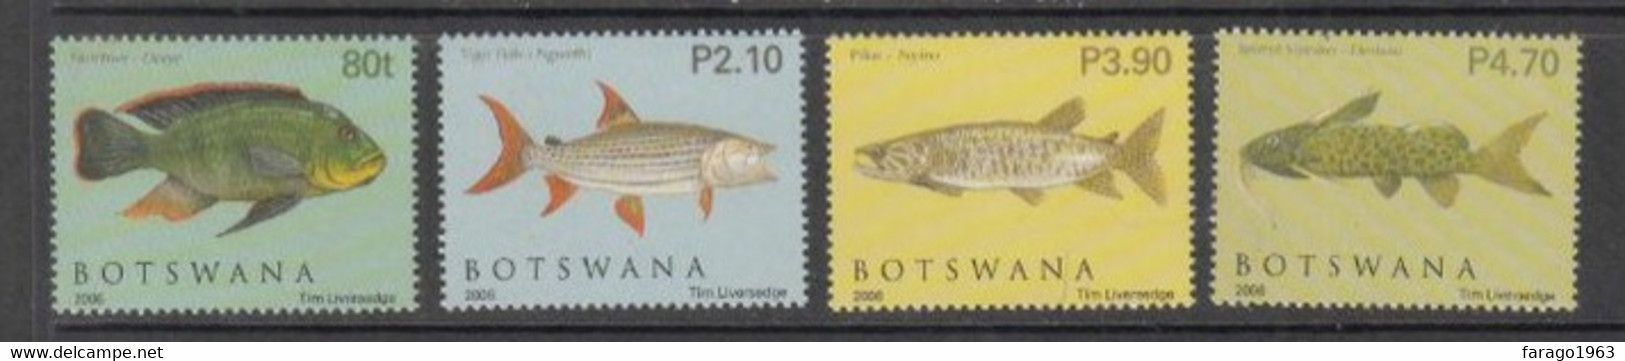 2006 Botswana Fish Poisson Complete Set Of 4 MNH - Botswana (1966-...)